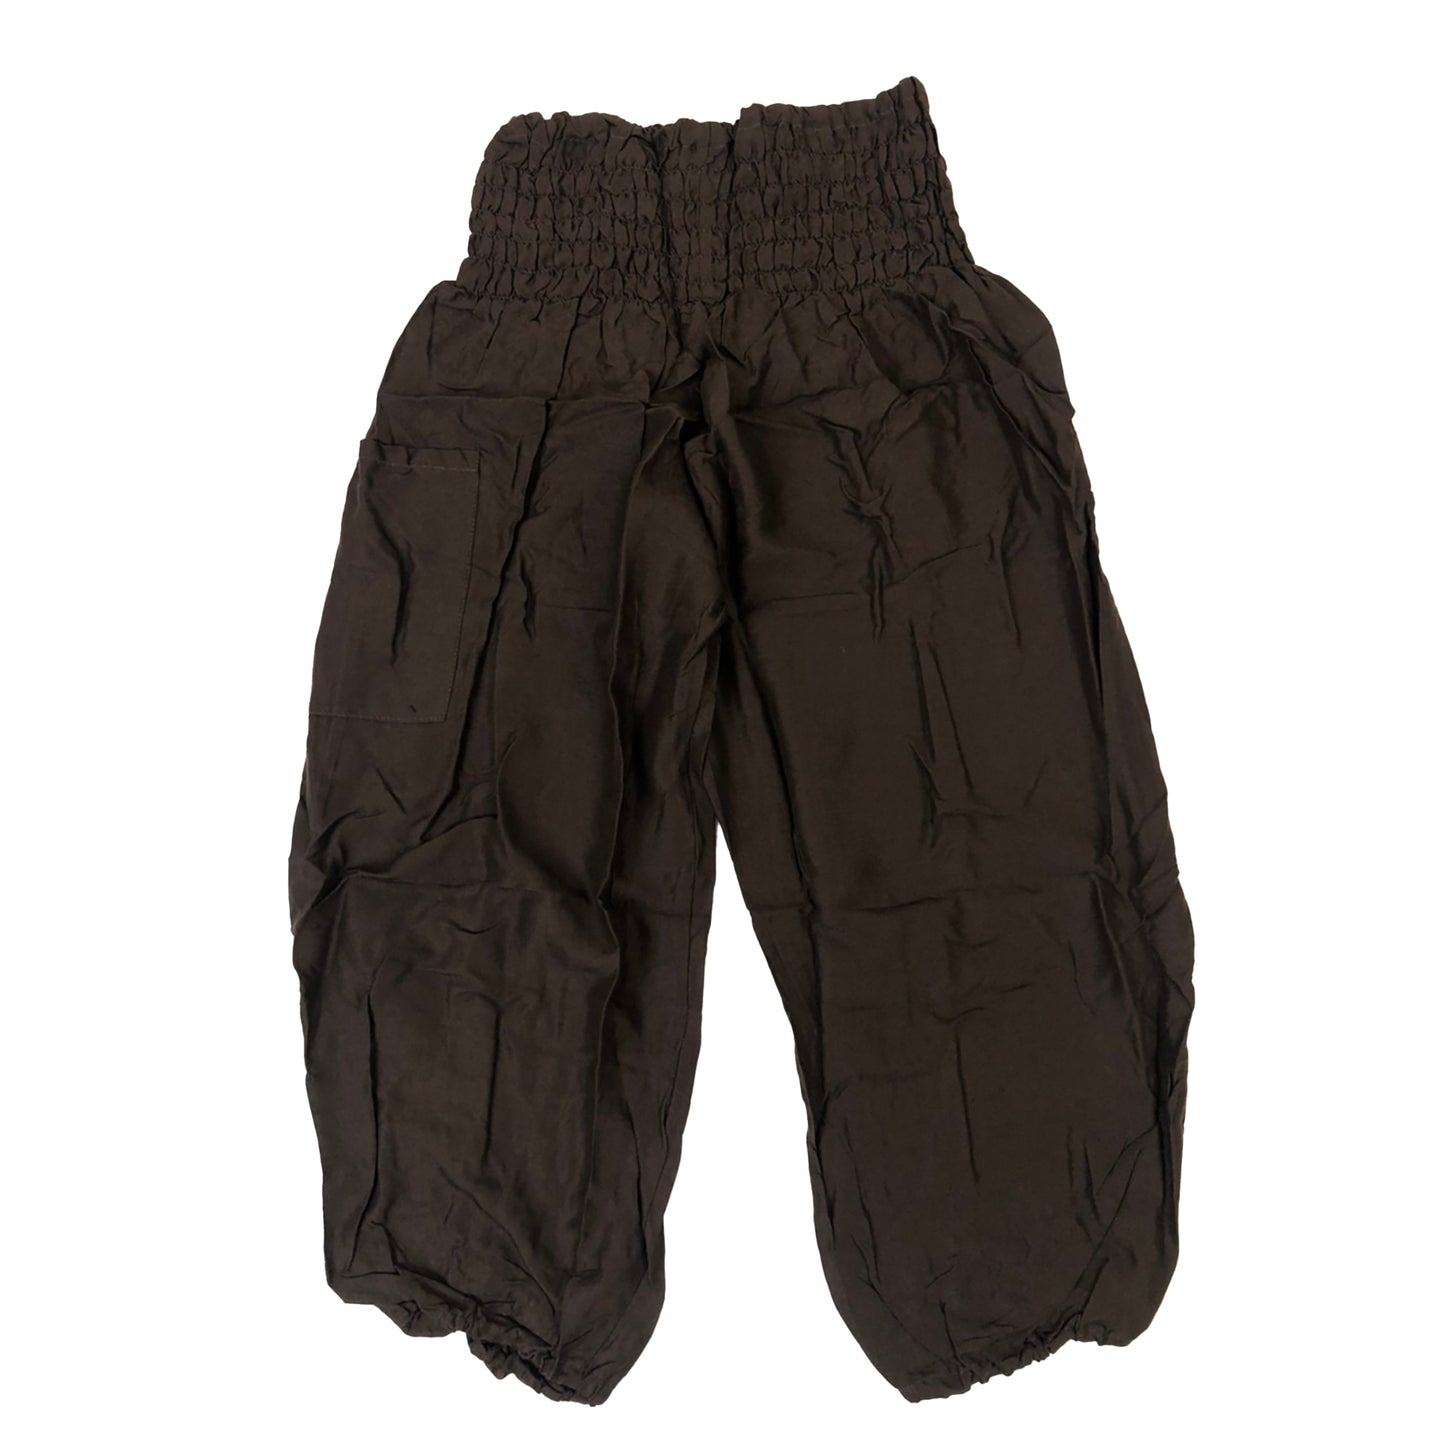 Solid Color Unisex Kid Harem Pants in Brown PP0004 020000 16